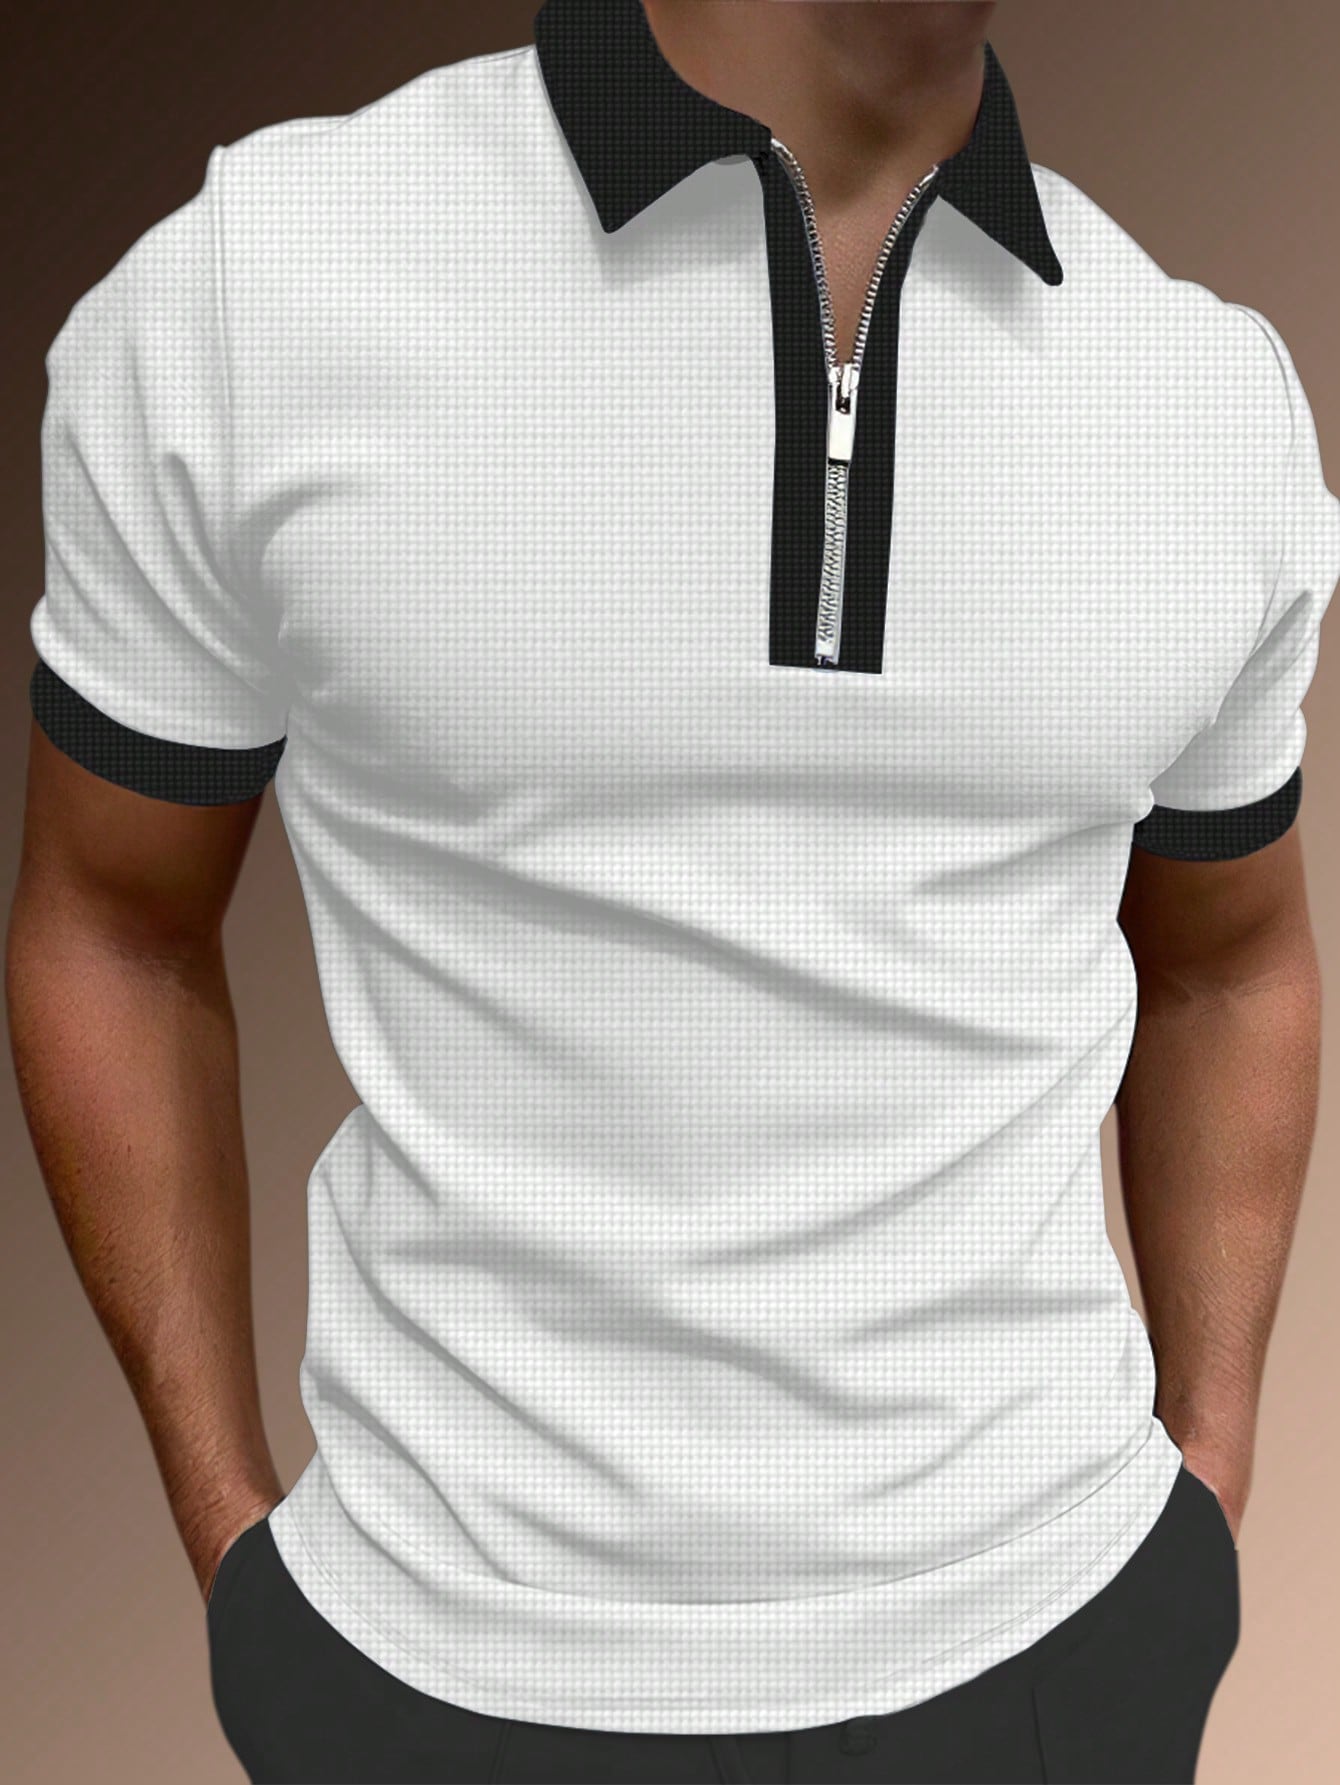 Men's Stylish Zip Polo Shirt.